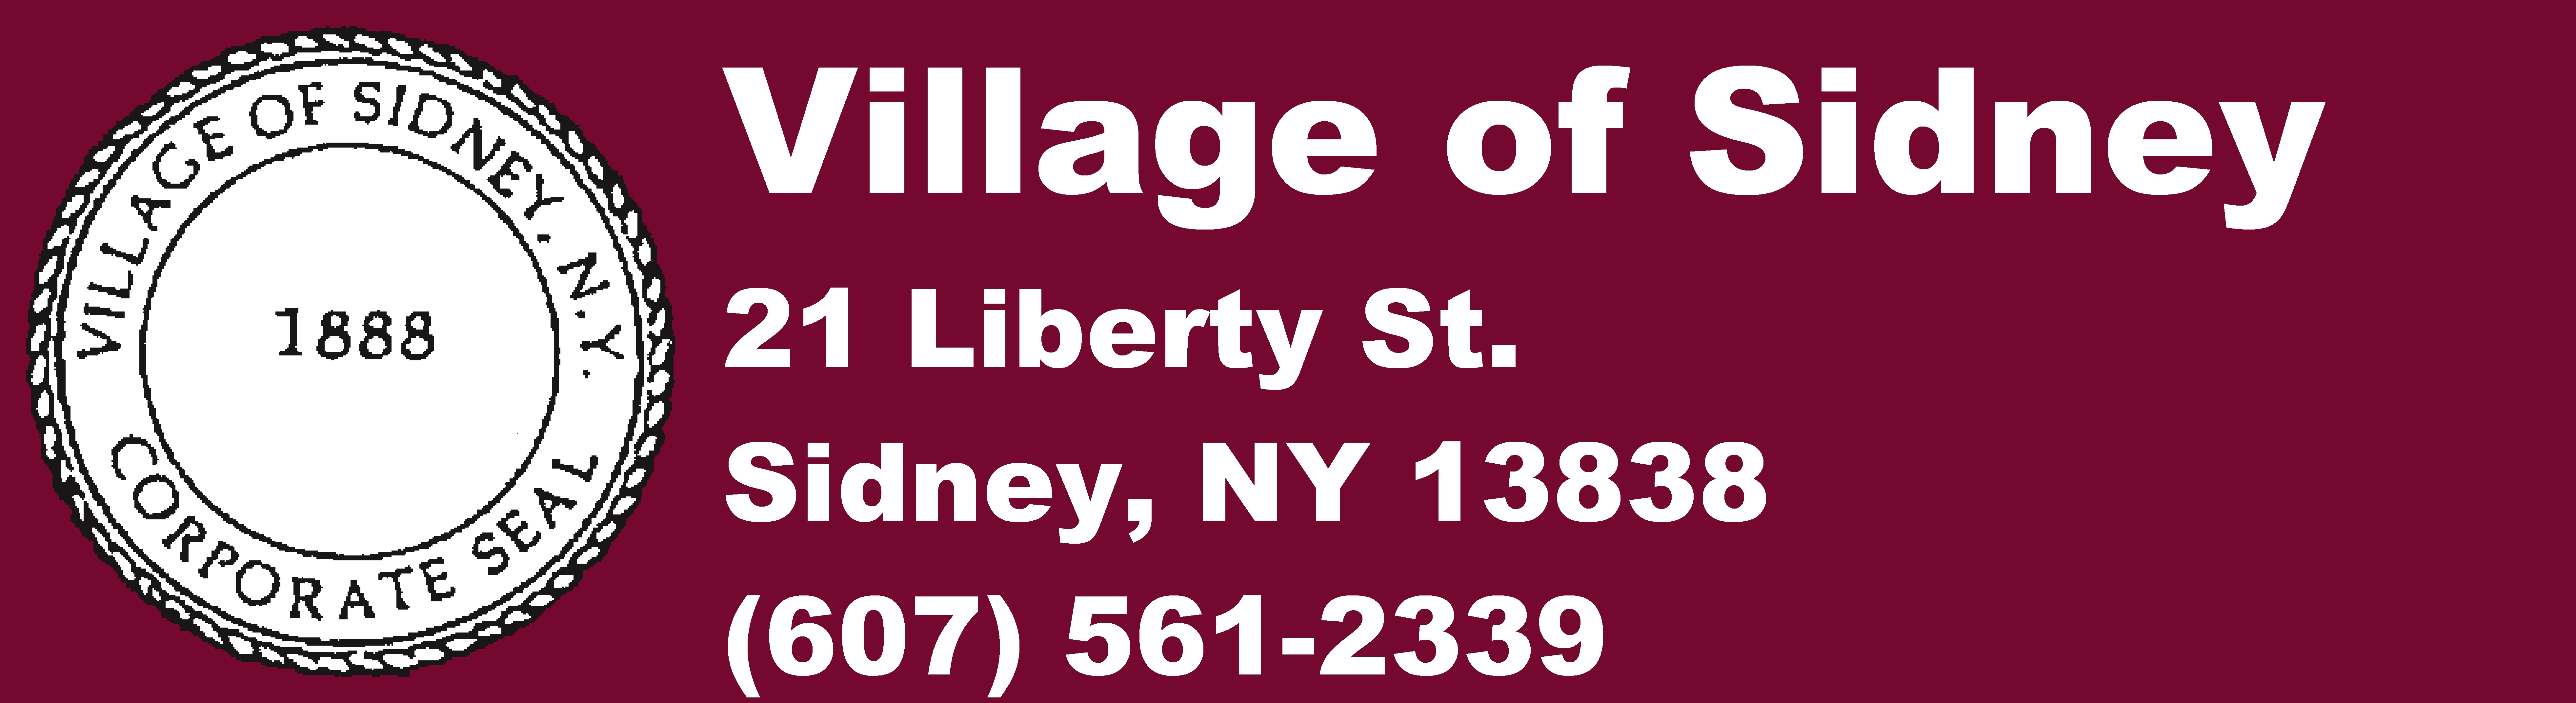 VILLAGE OF SIDNEY, NEW YORK Logo